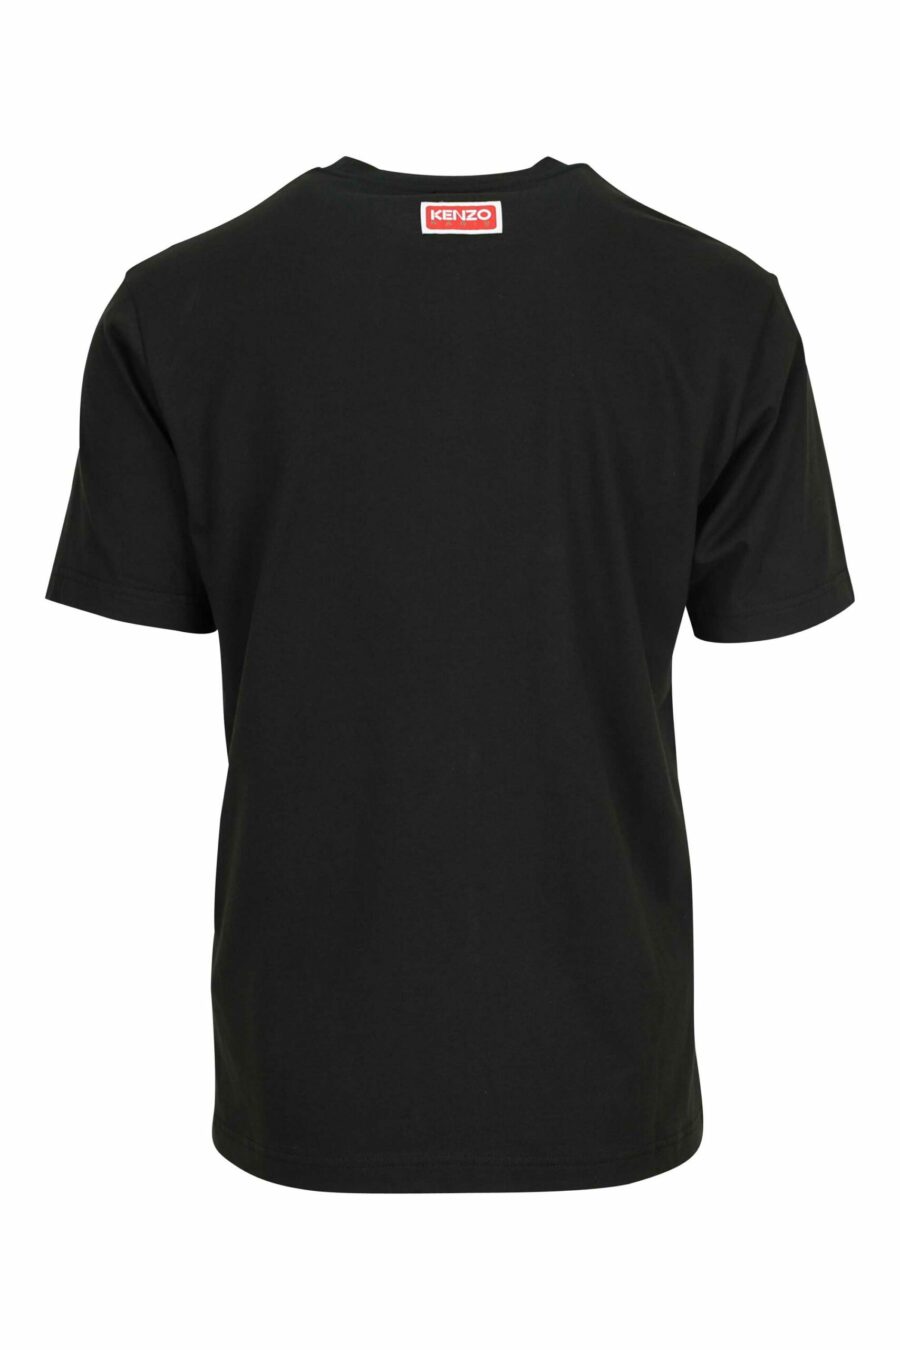 Schwarzes T-Shirt mit Maxilogo "kenzo elephant" - 3612230625624 1 skaliert